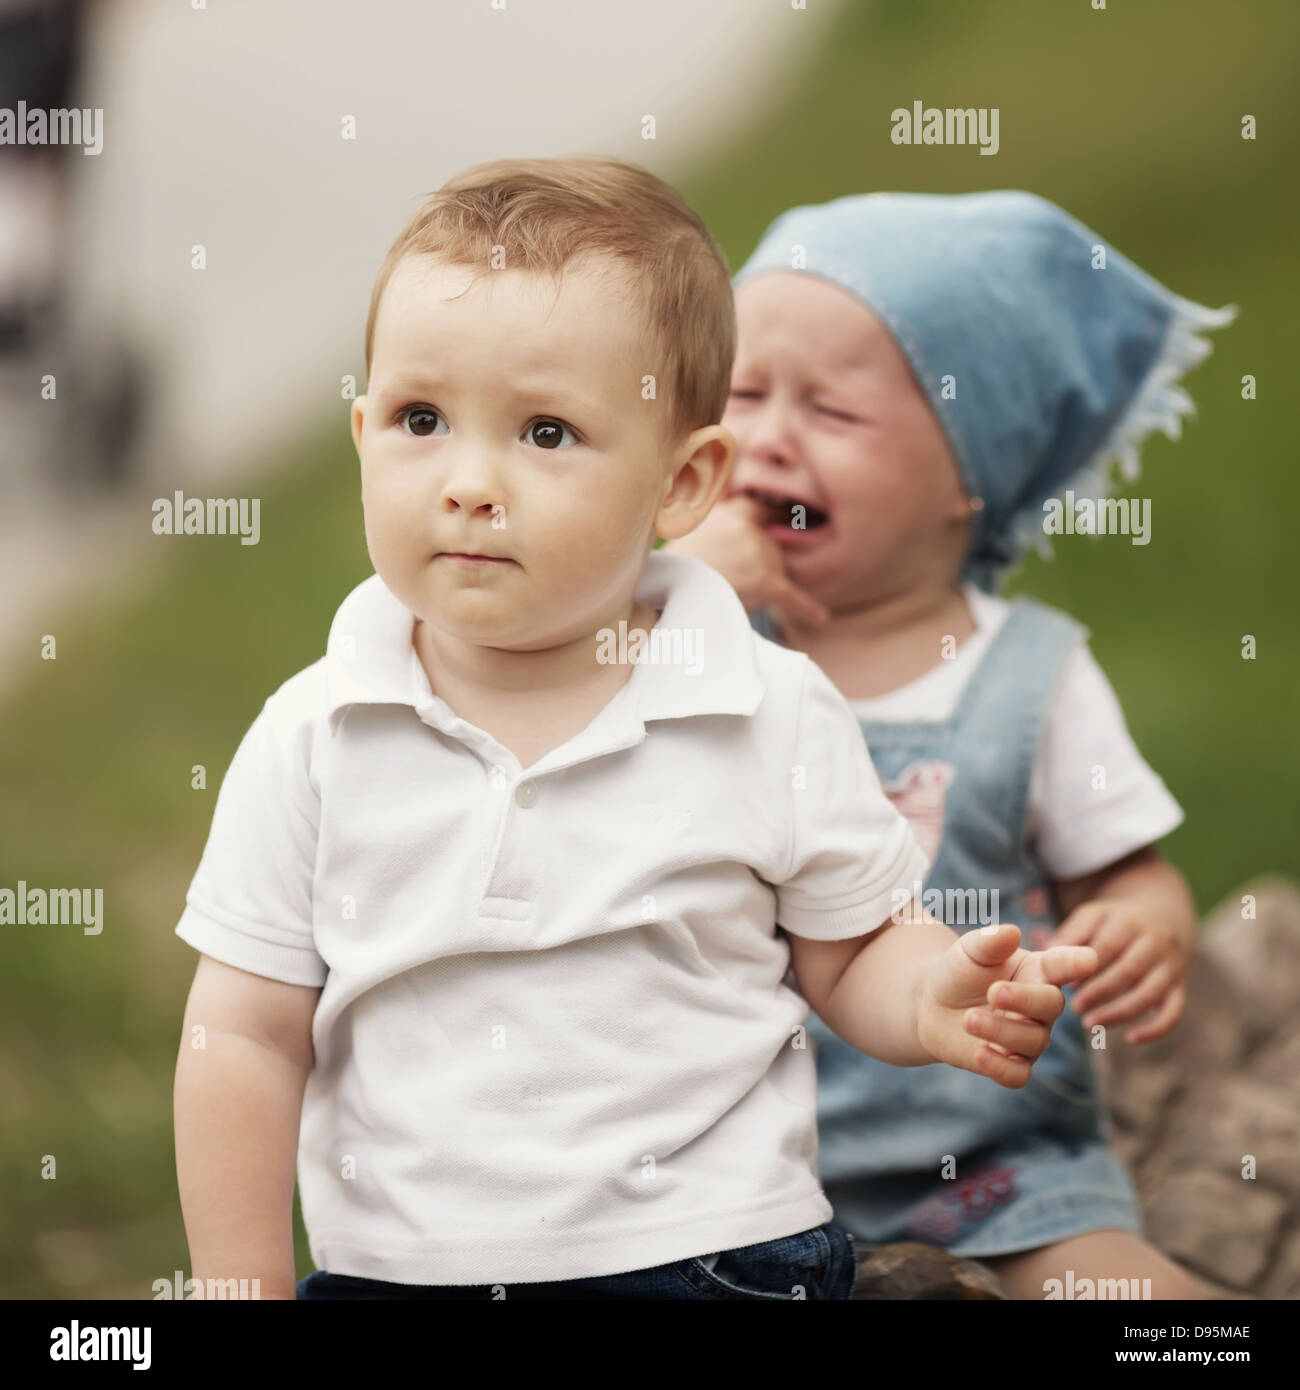 little boy and crying girl Stock Photo - Alamy